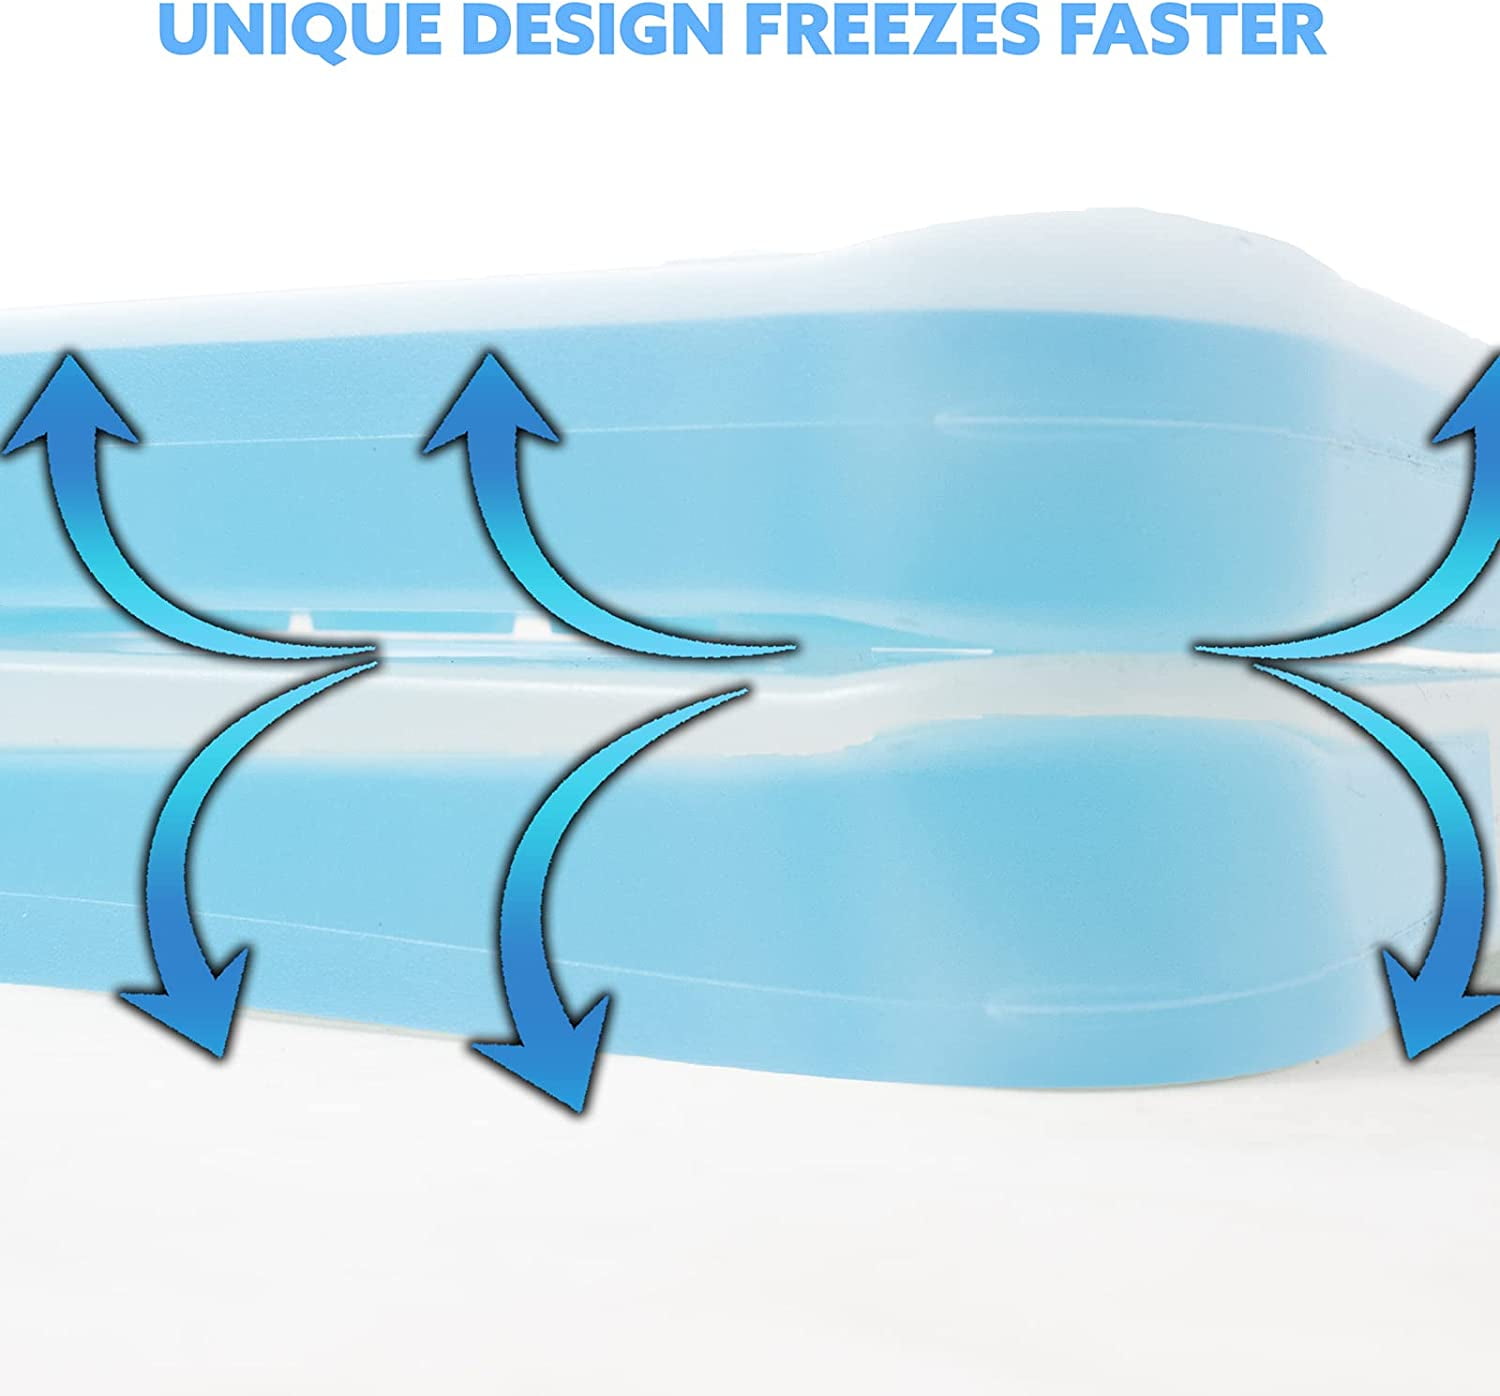 Kona Large Ice Packs for Coolers - Slim Space Saving Design - 25 Minut